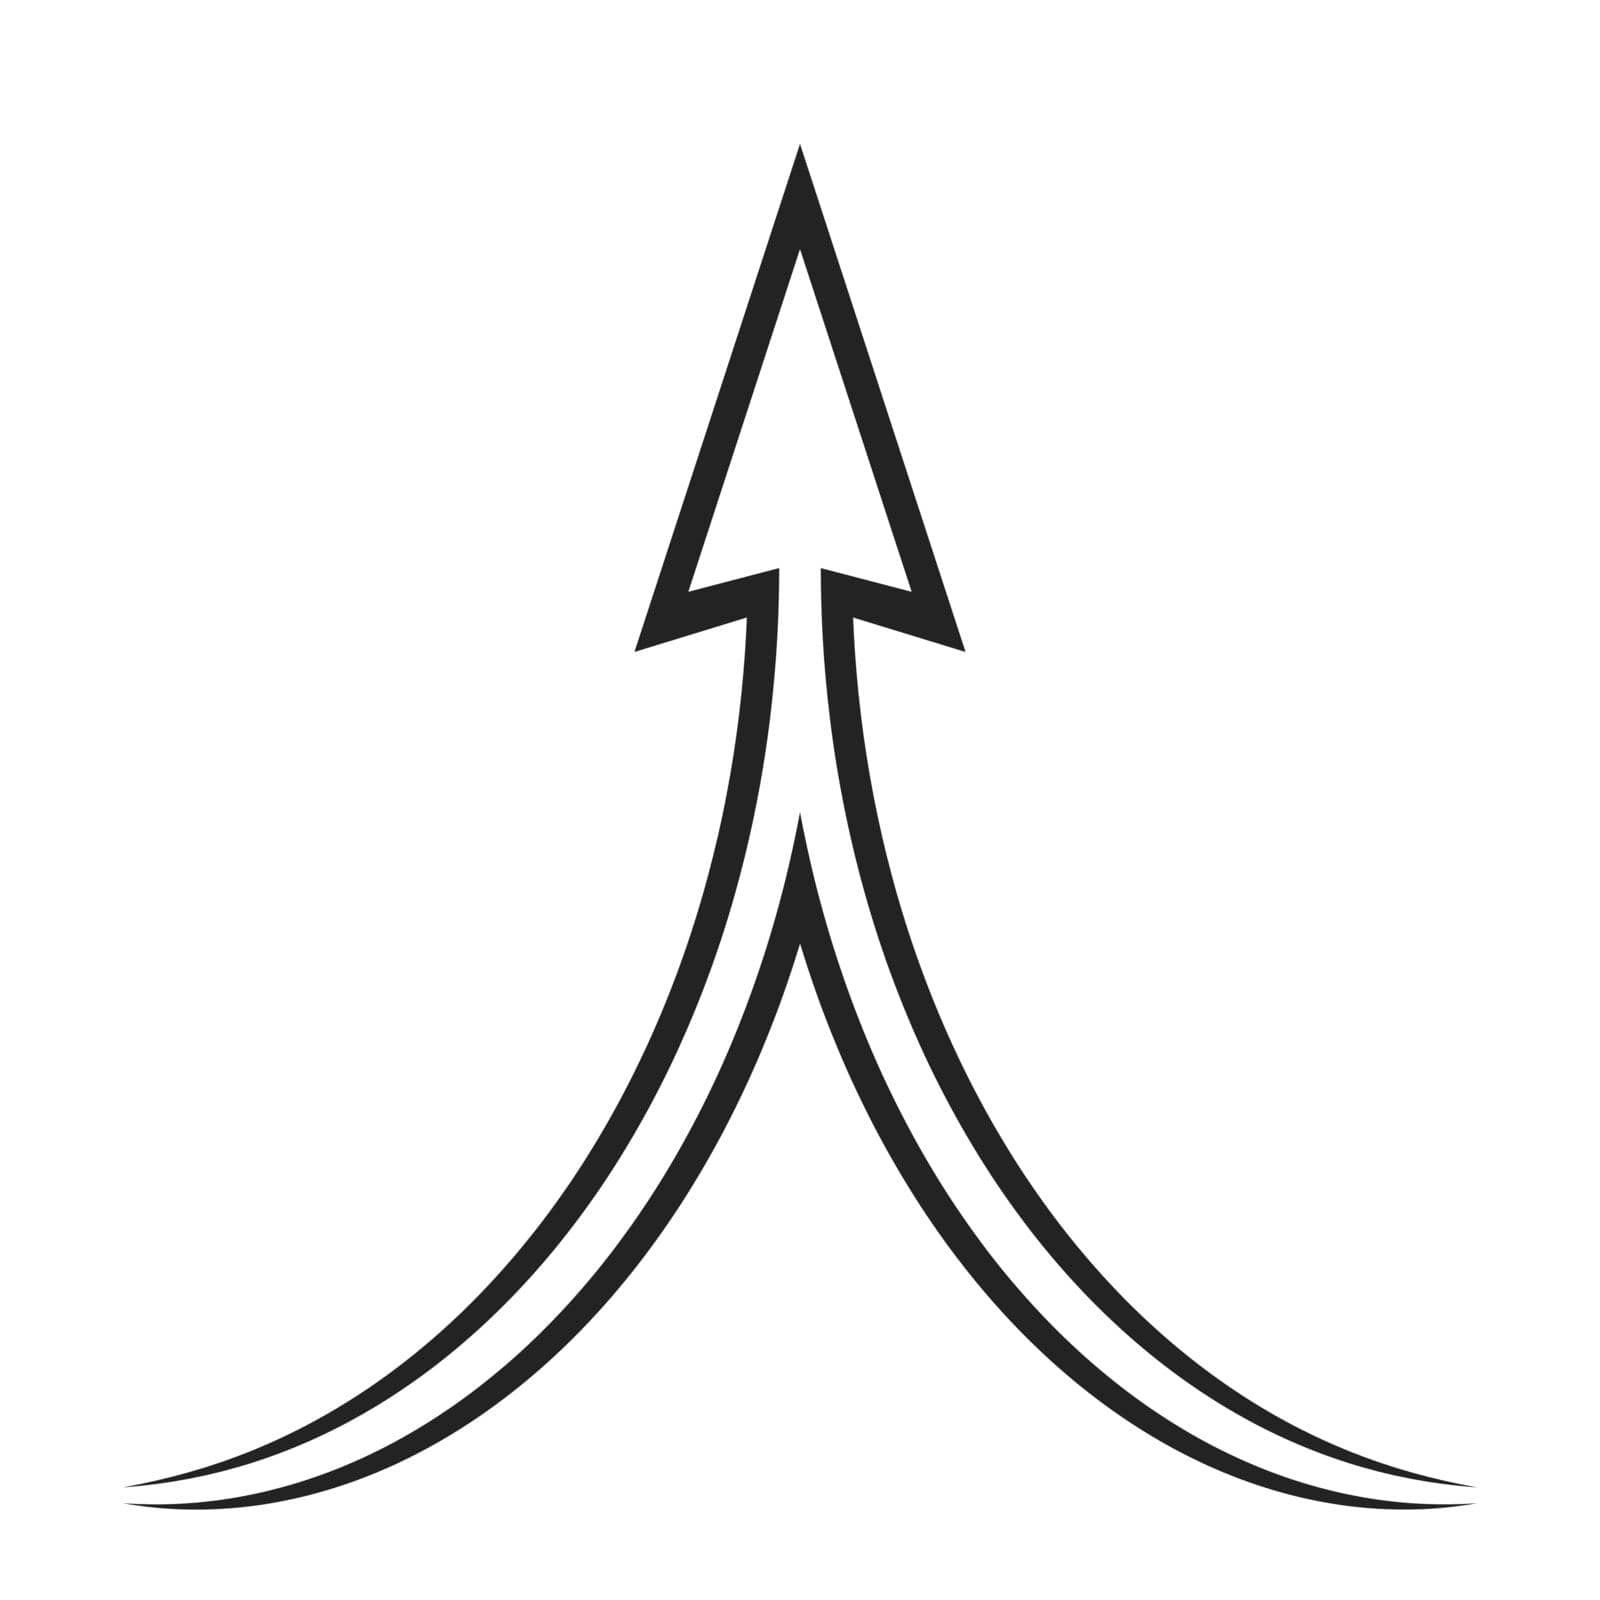 Climb up icon double combined arrow indicates take off value stock illustration by koksikoks